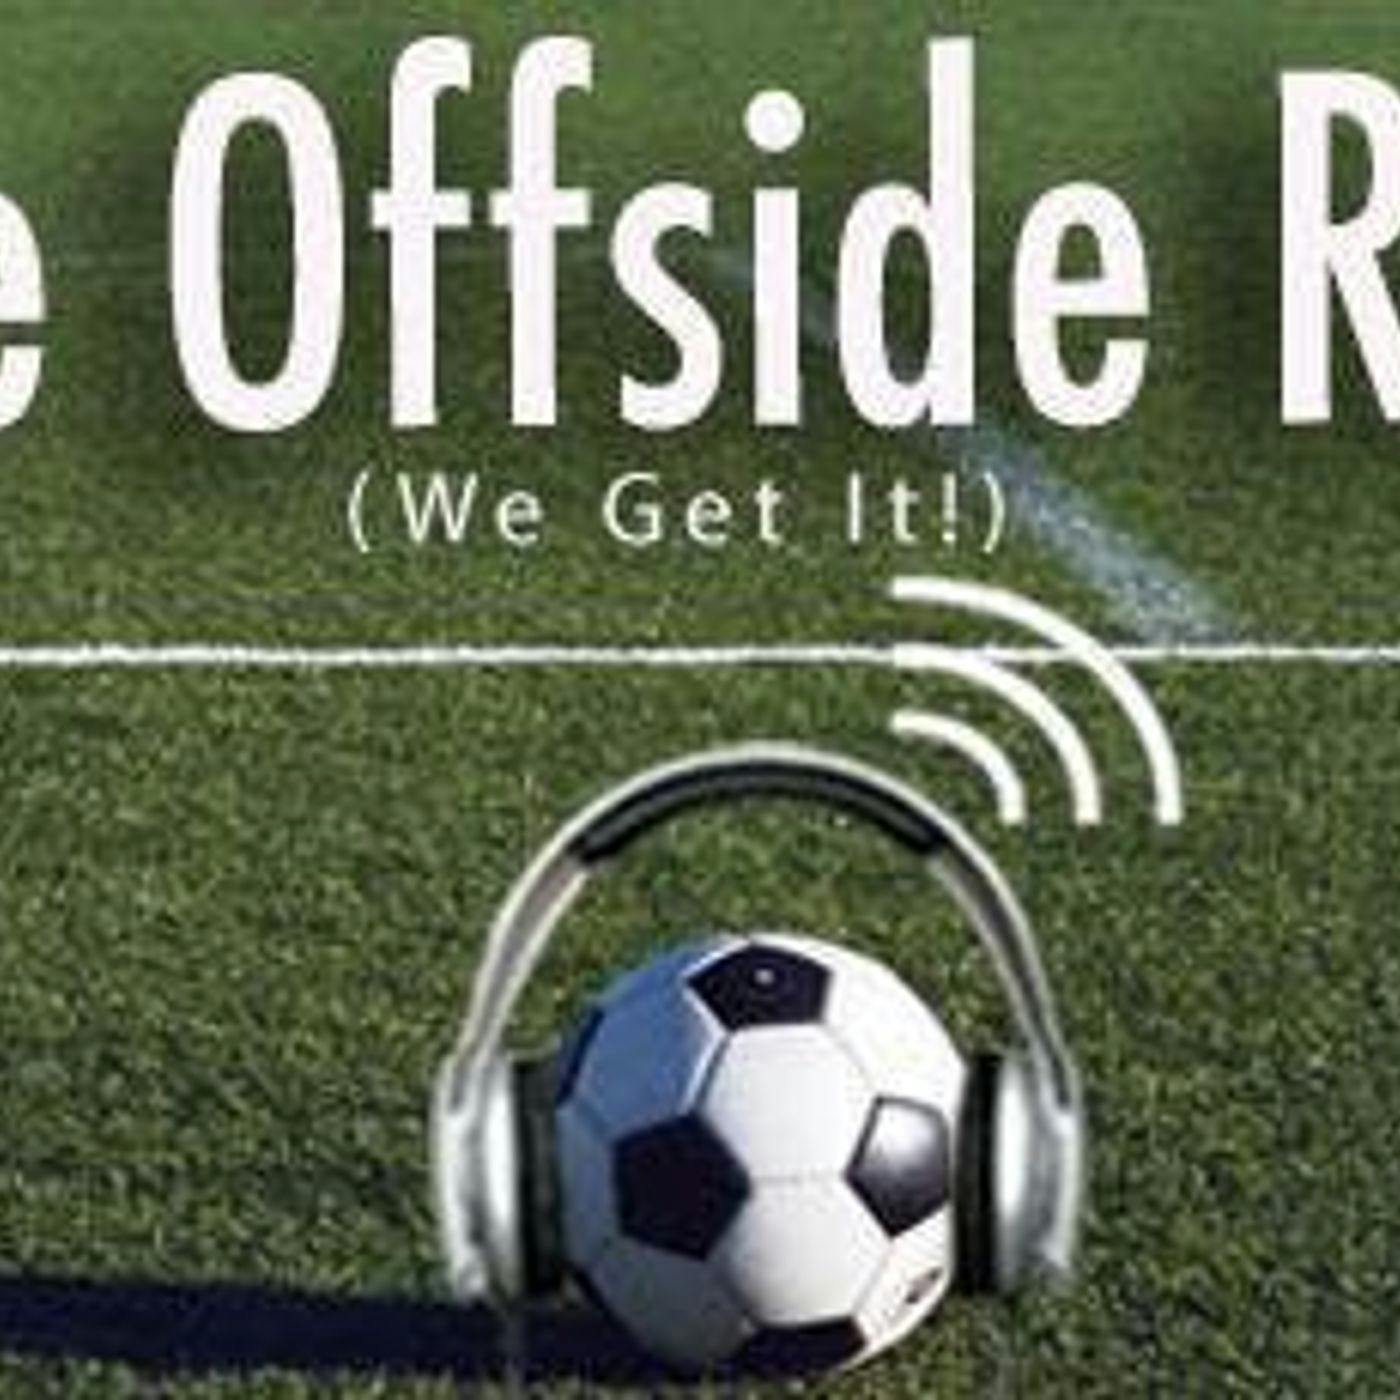 The Offside Rule 2013/14 Episode 37